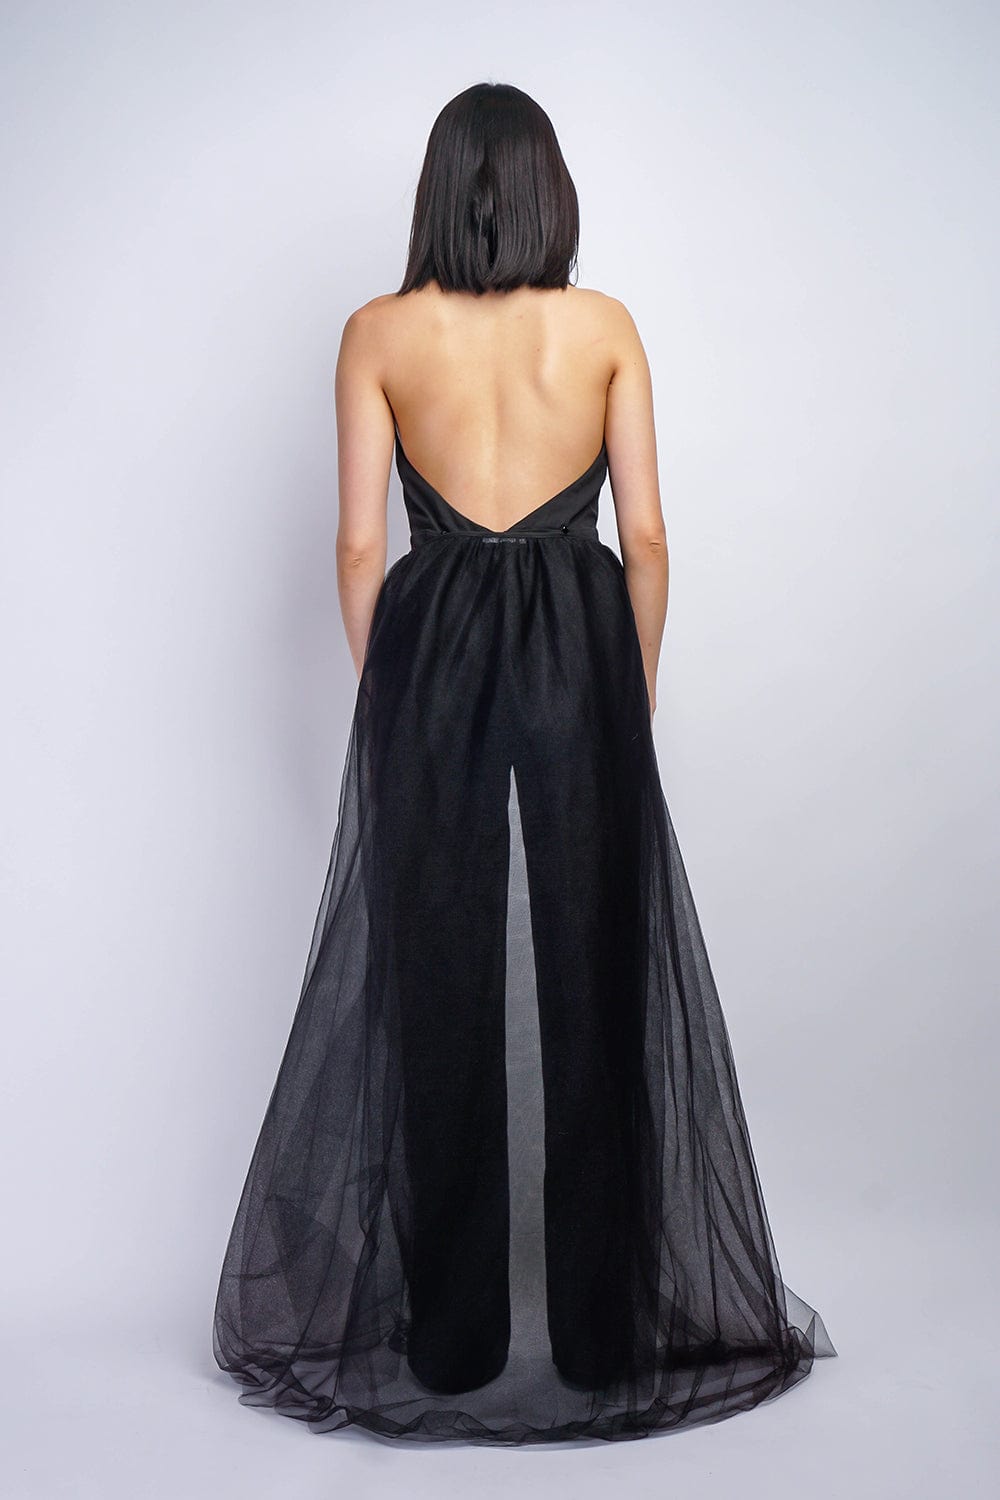 Muslim Women Long Suspender Skirt Maxi High Waist Pleated Swing Dresses  Overalls | eBay